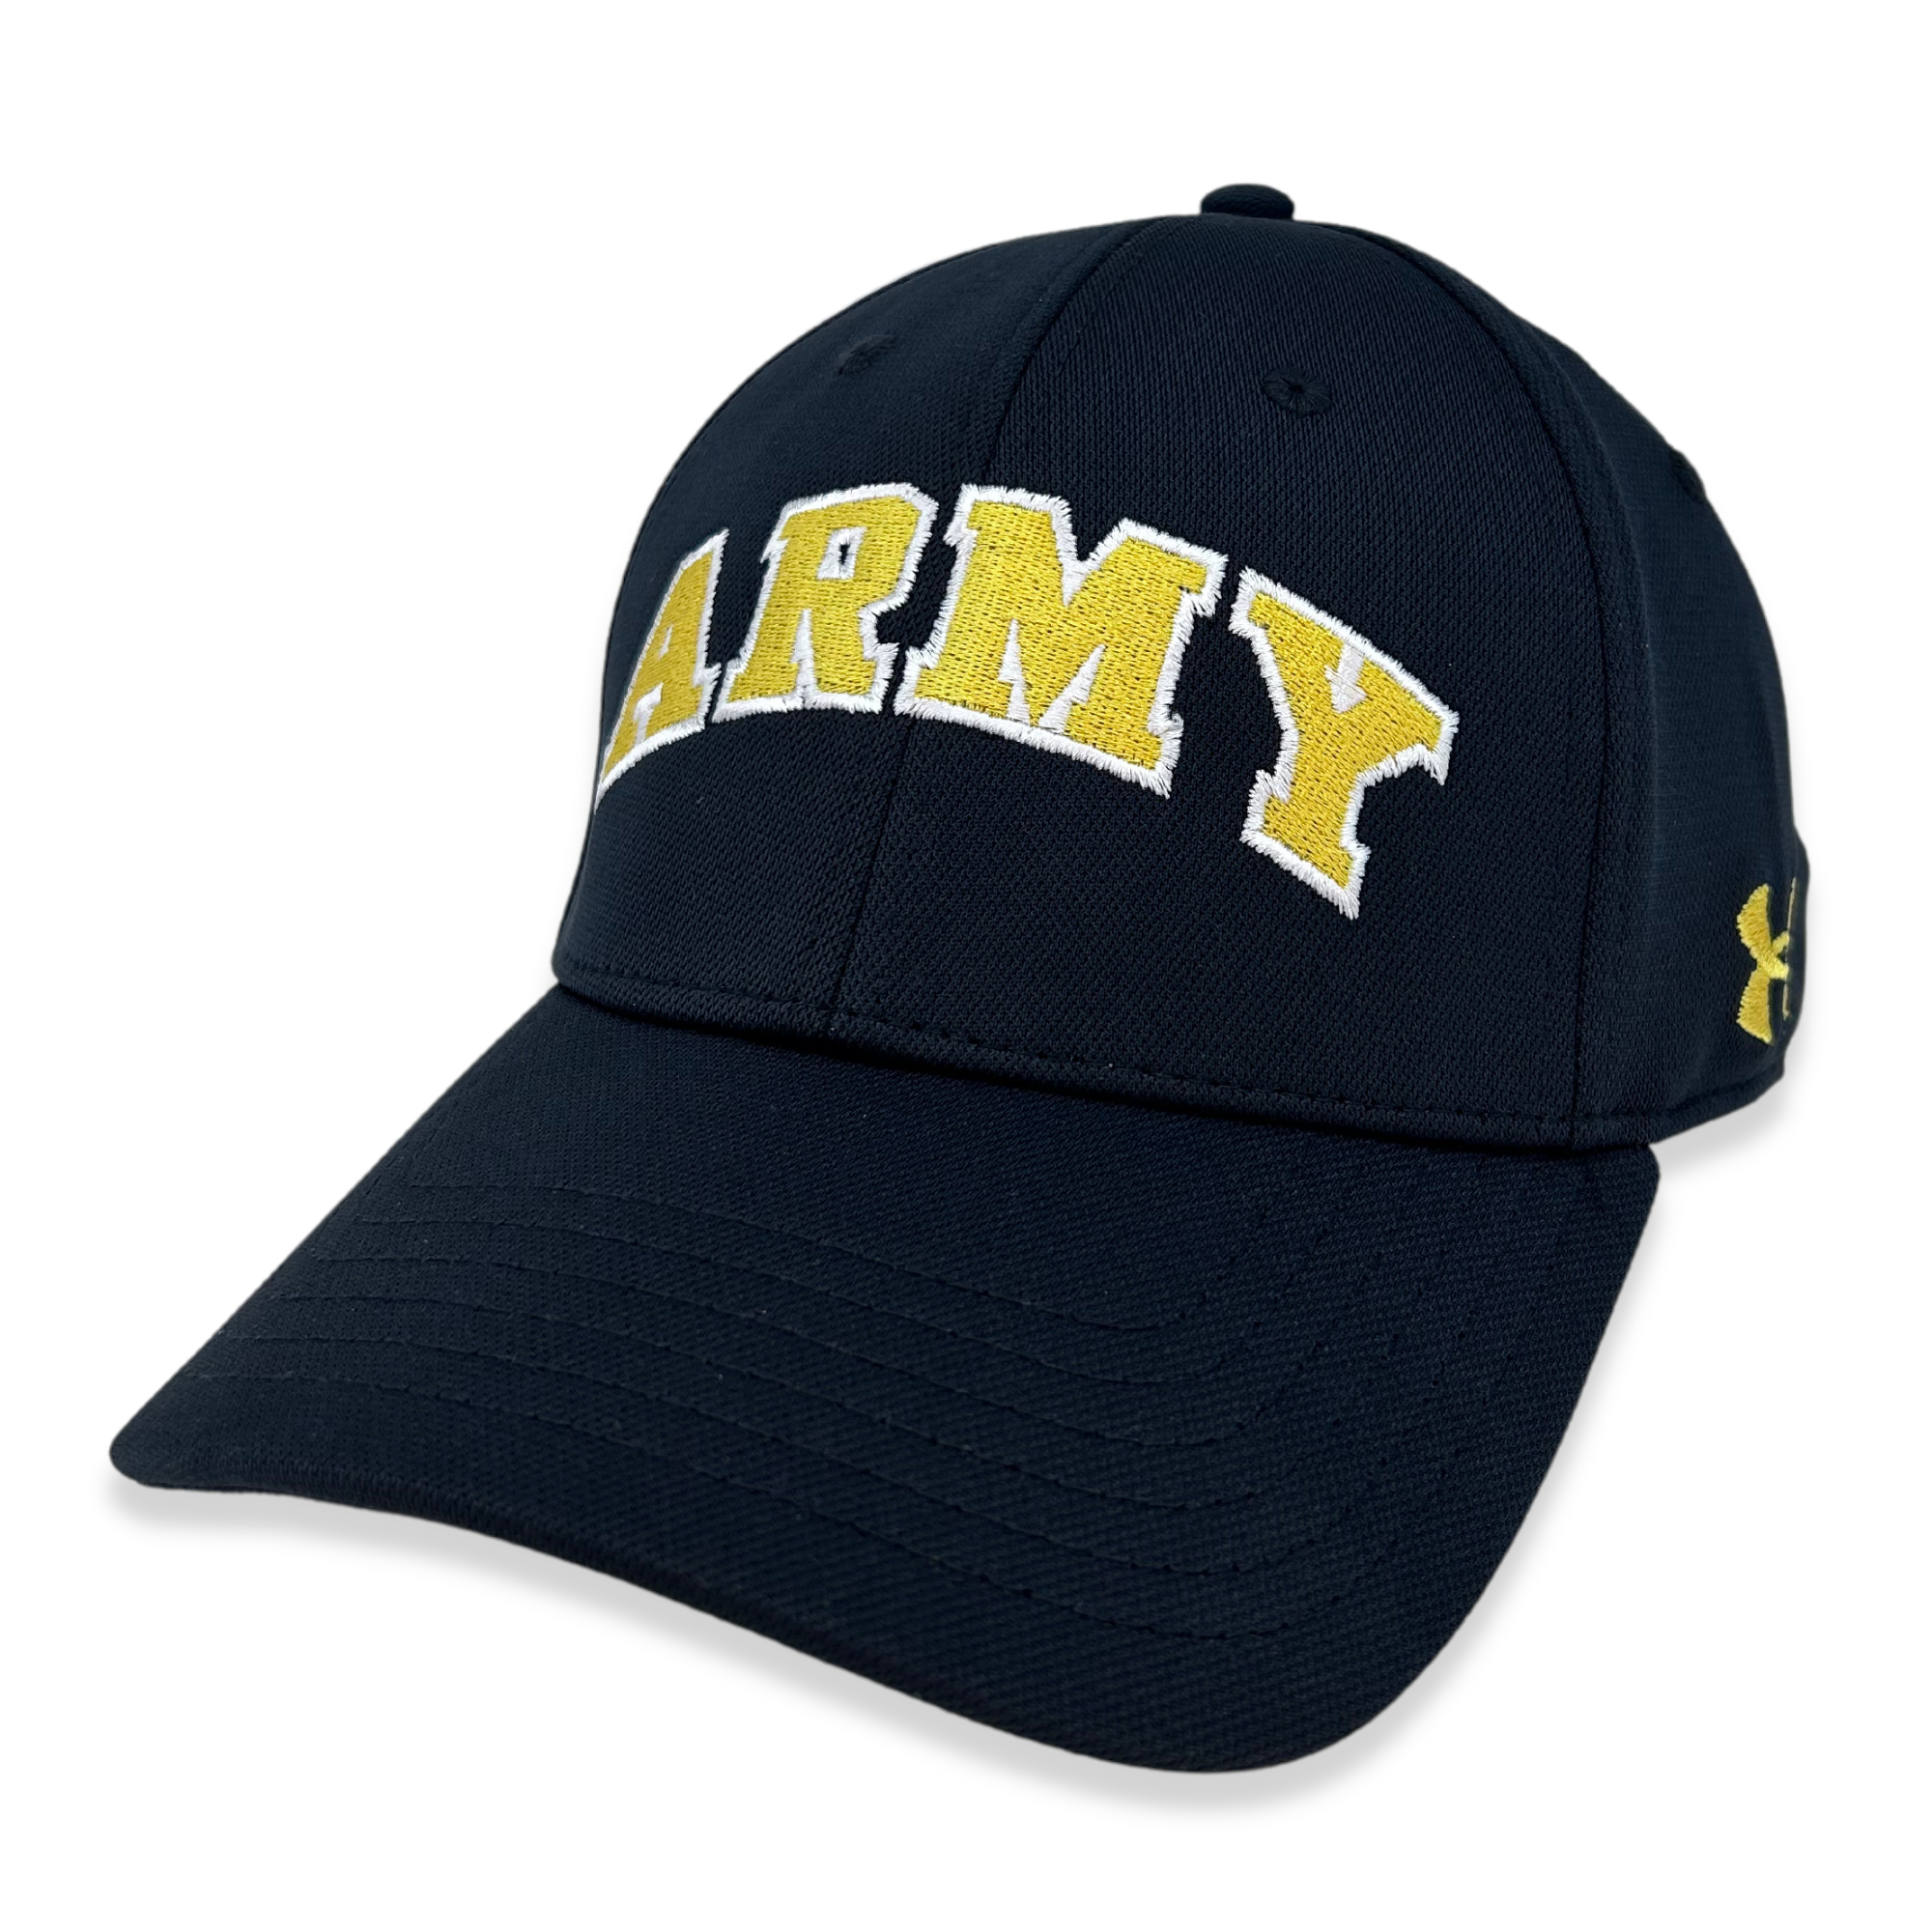 Fit Army Hat Under Blitzing Armour Flex (Black)